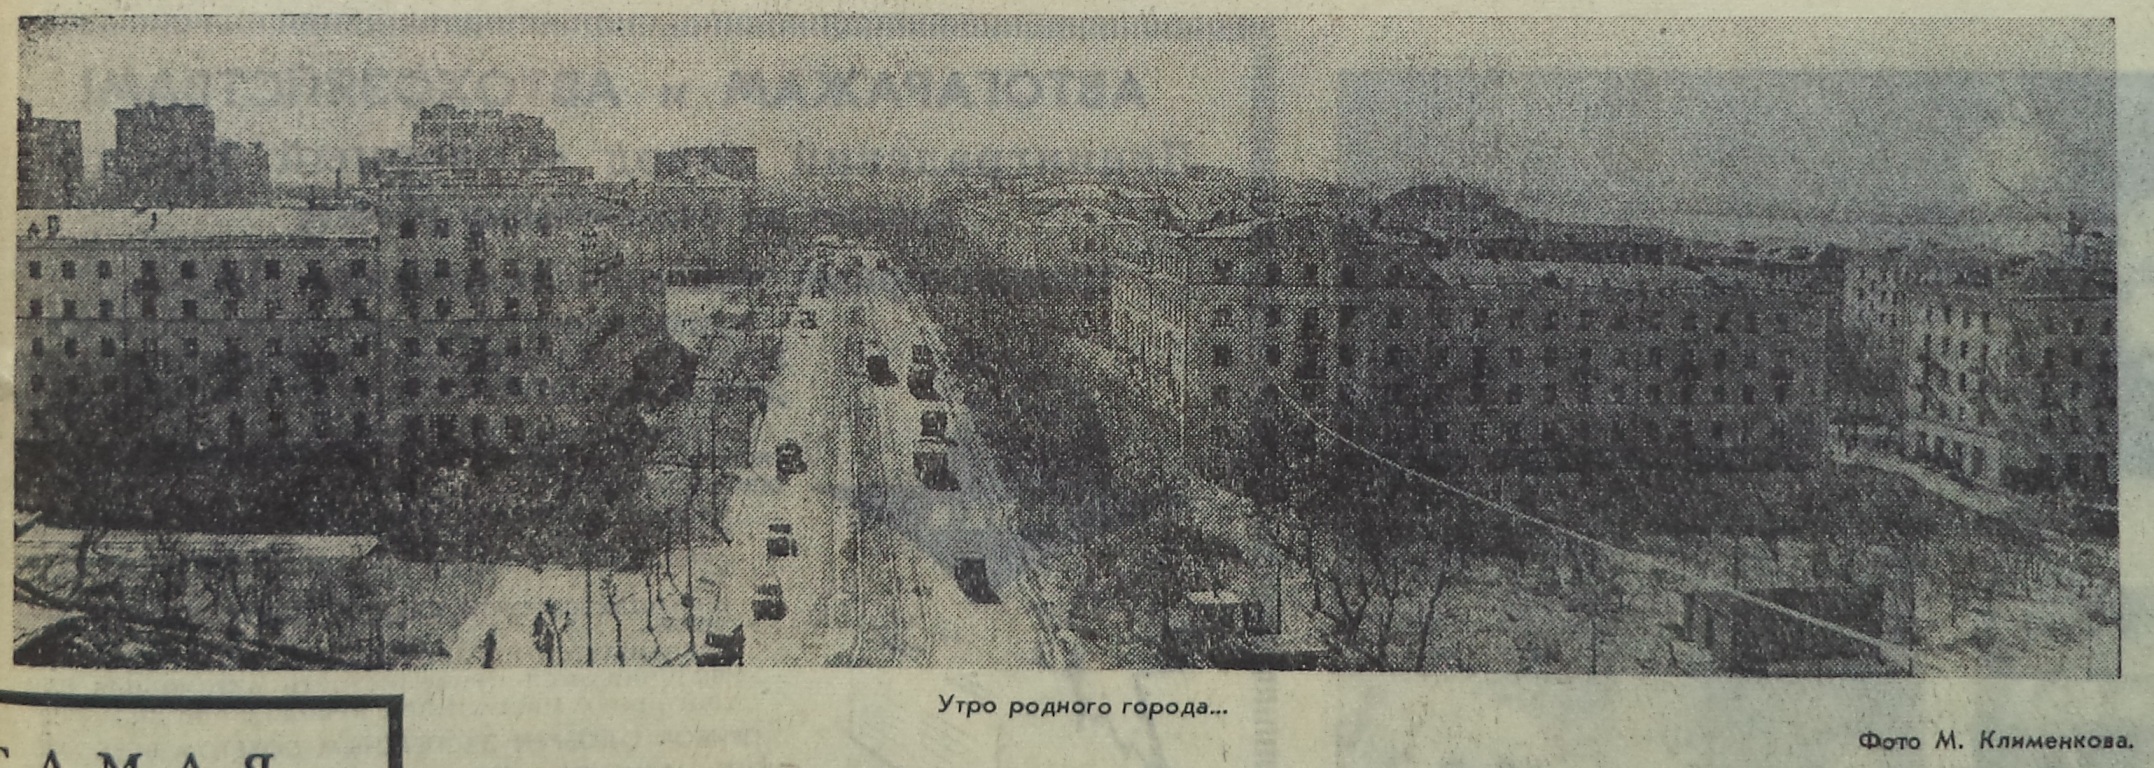 Ново-Садовая-ФОТО-44-ВЗя-1969-04-23-панорама НС от Осип. в город